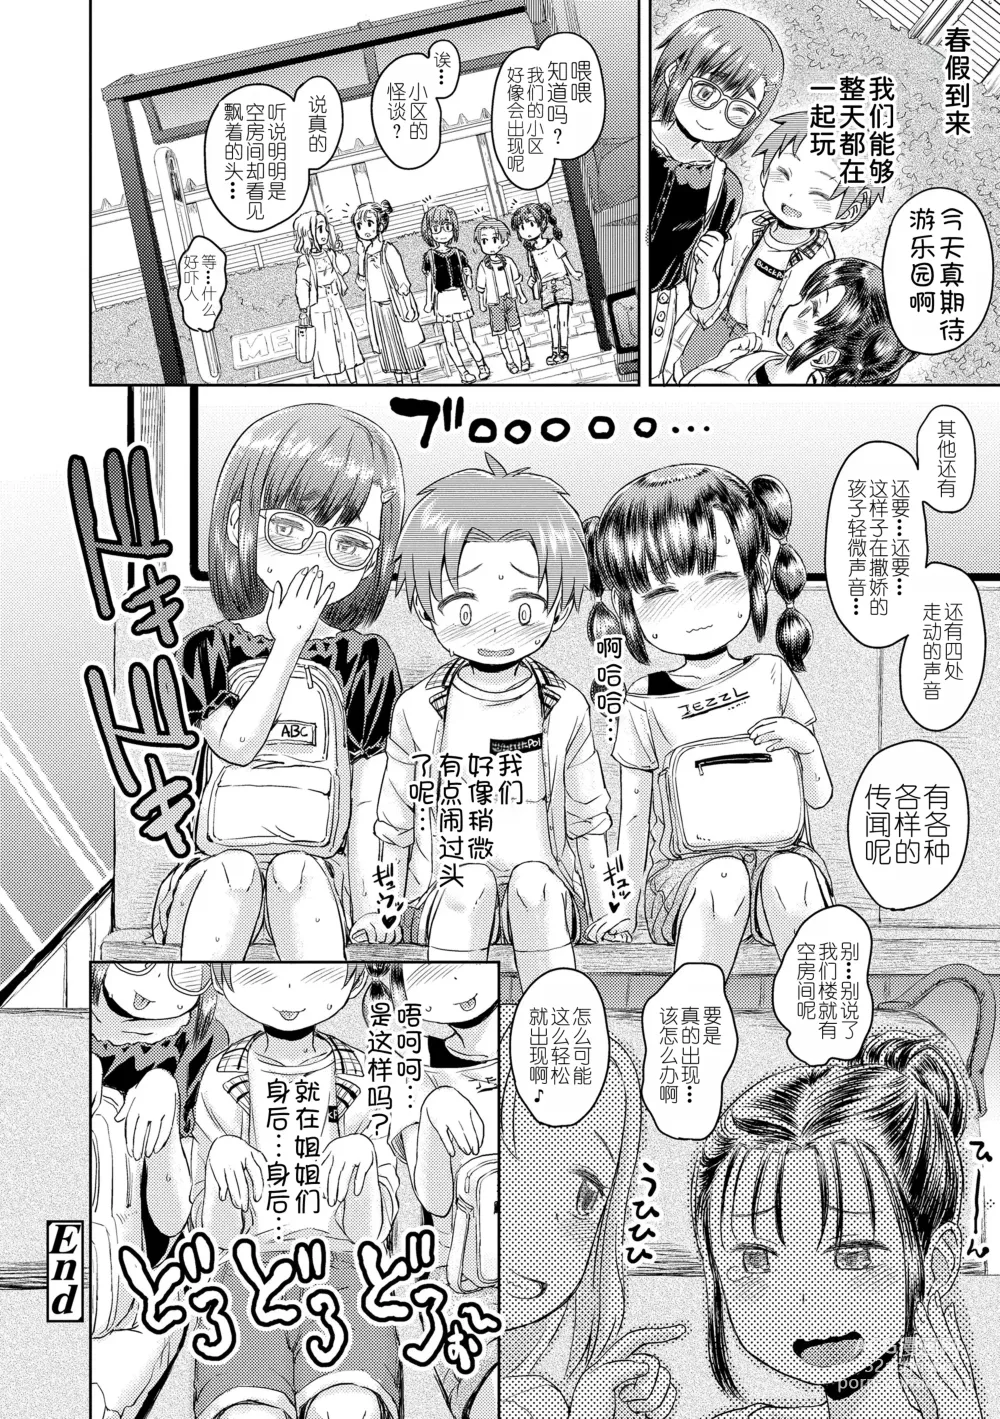 Page 82 of manga Akagane Danchi no Obake Heya Ch. 1-3